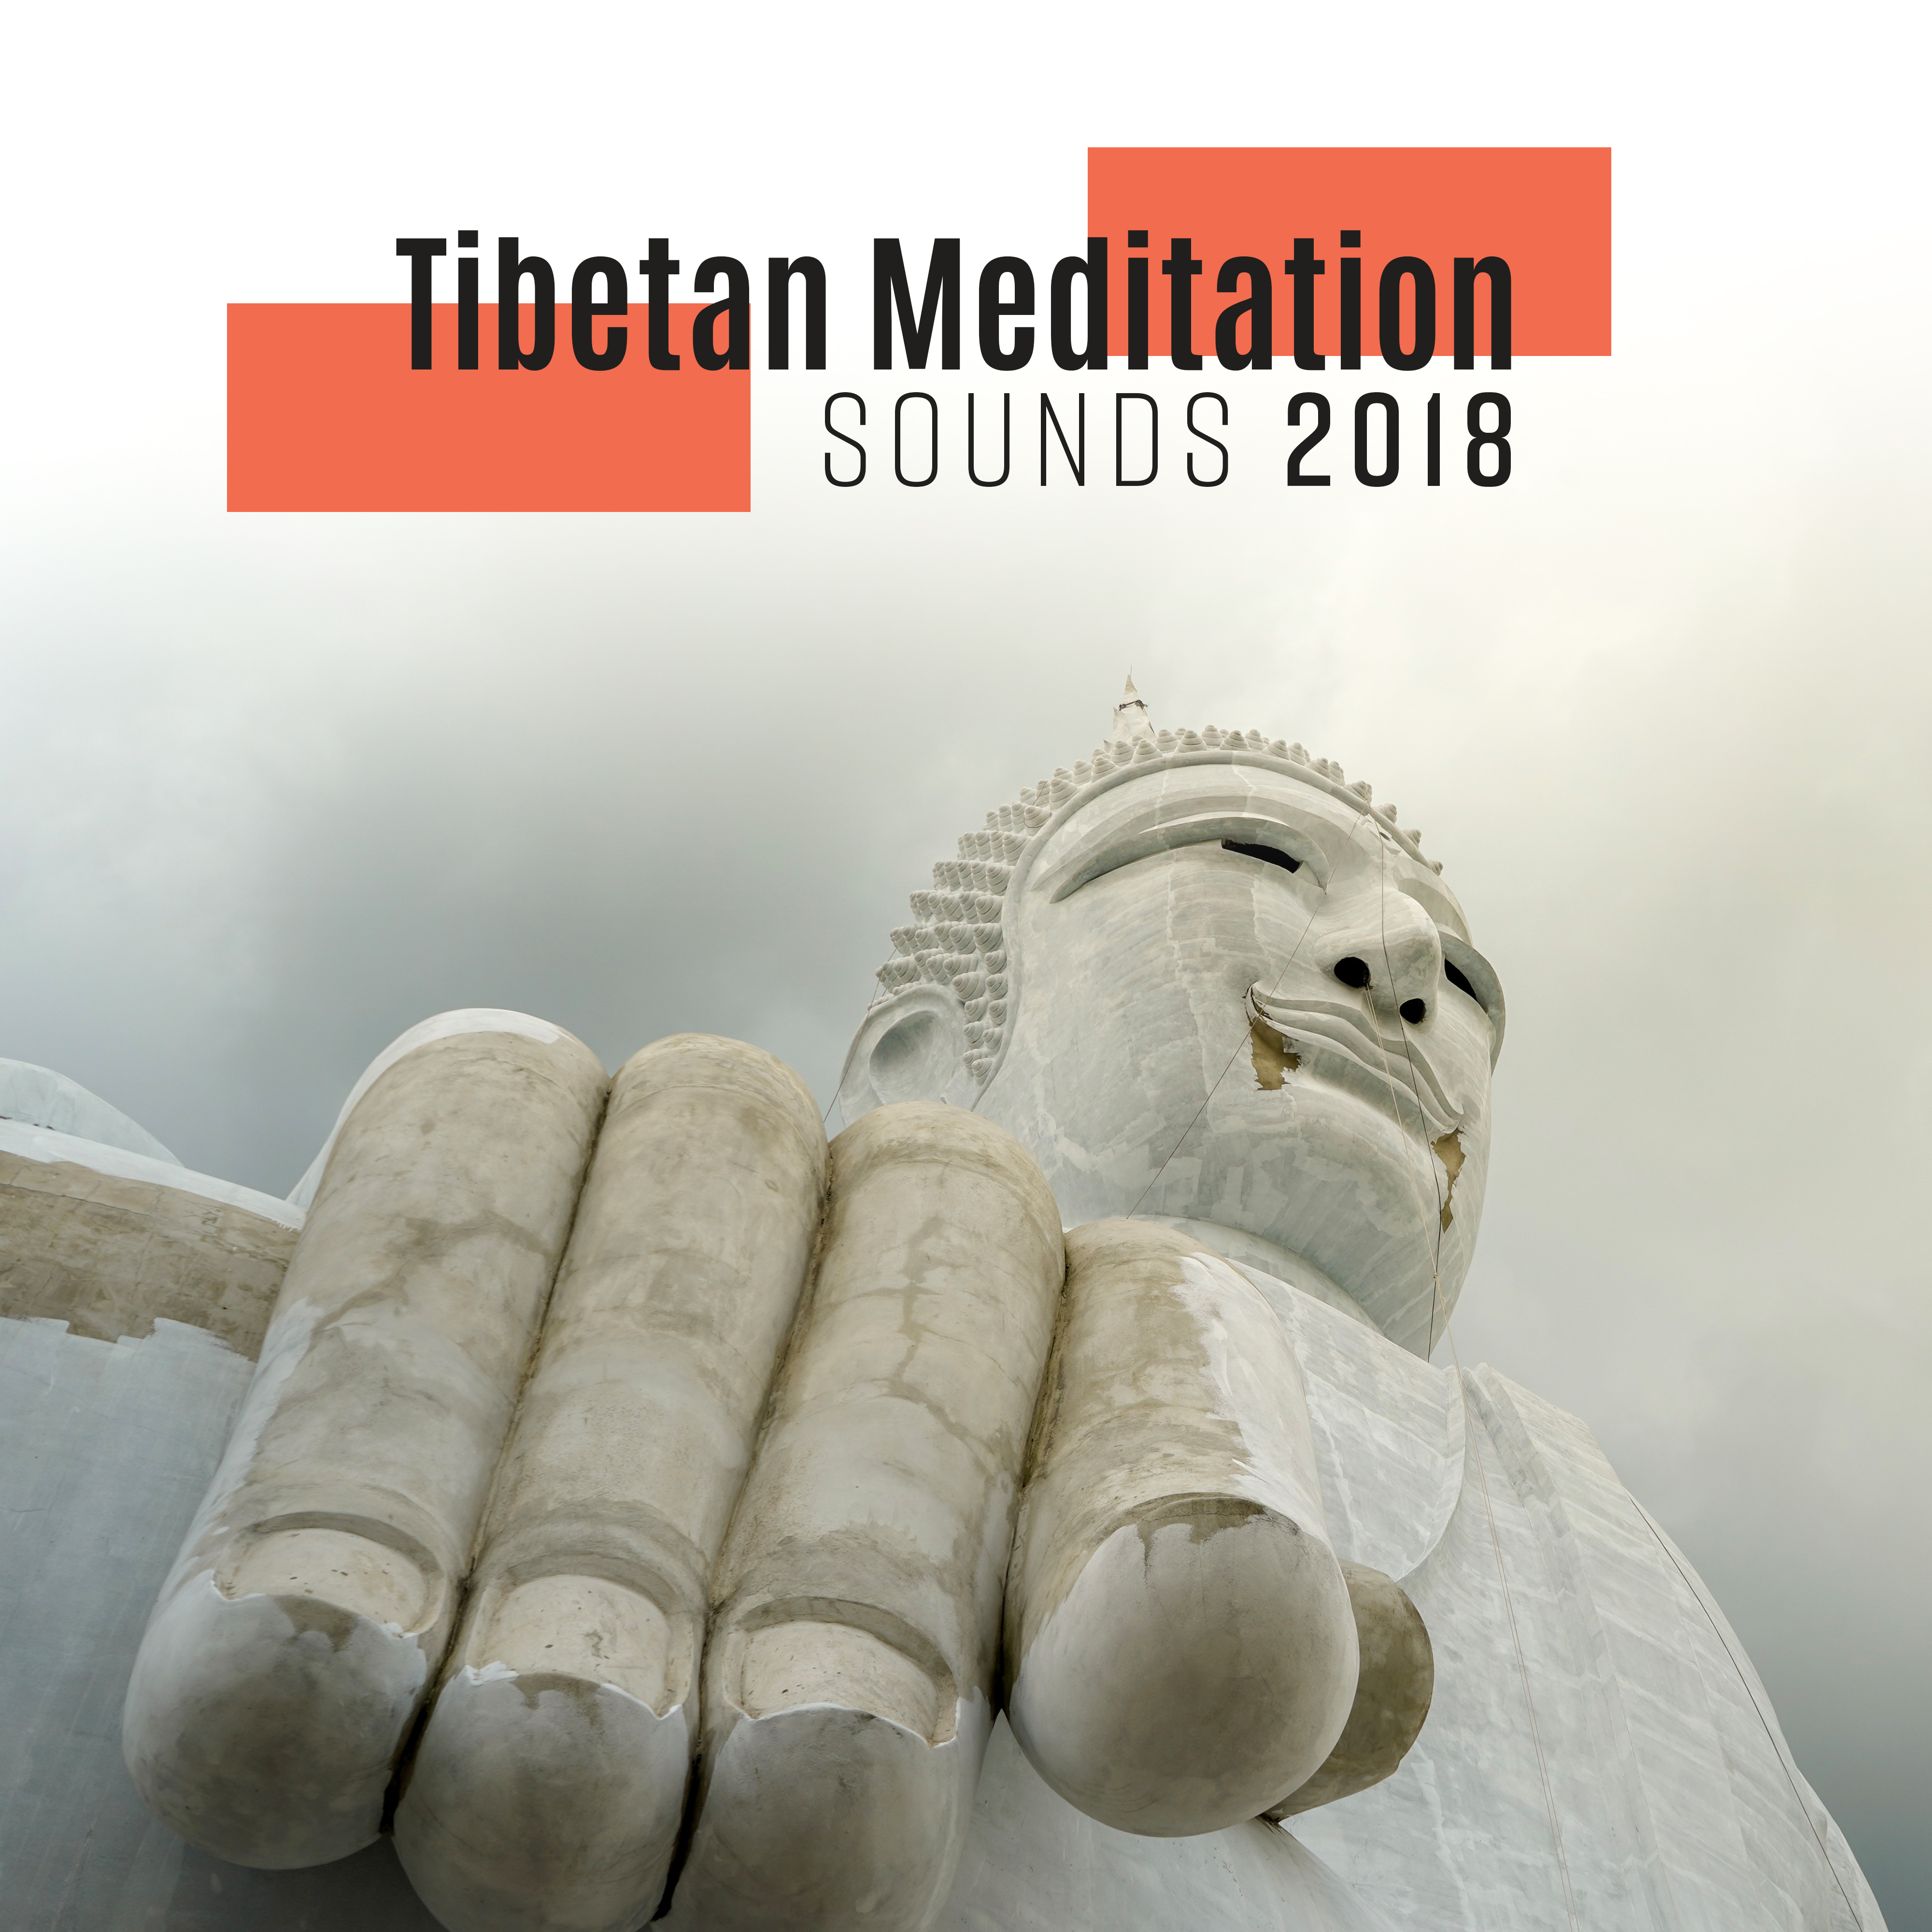 Tibetan Meditation Sounds 2018